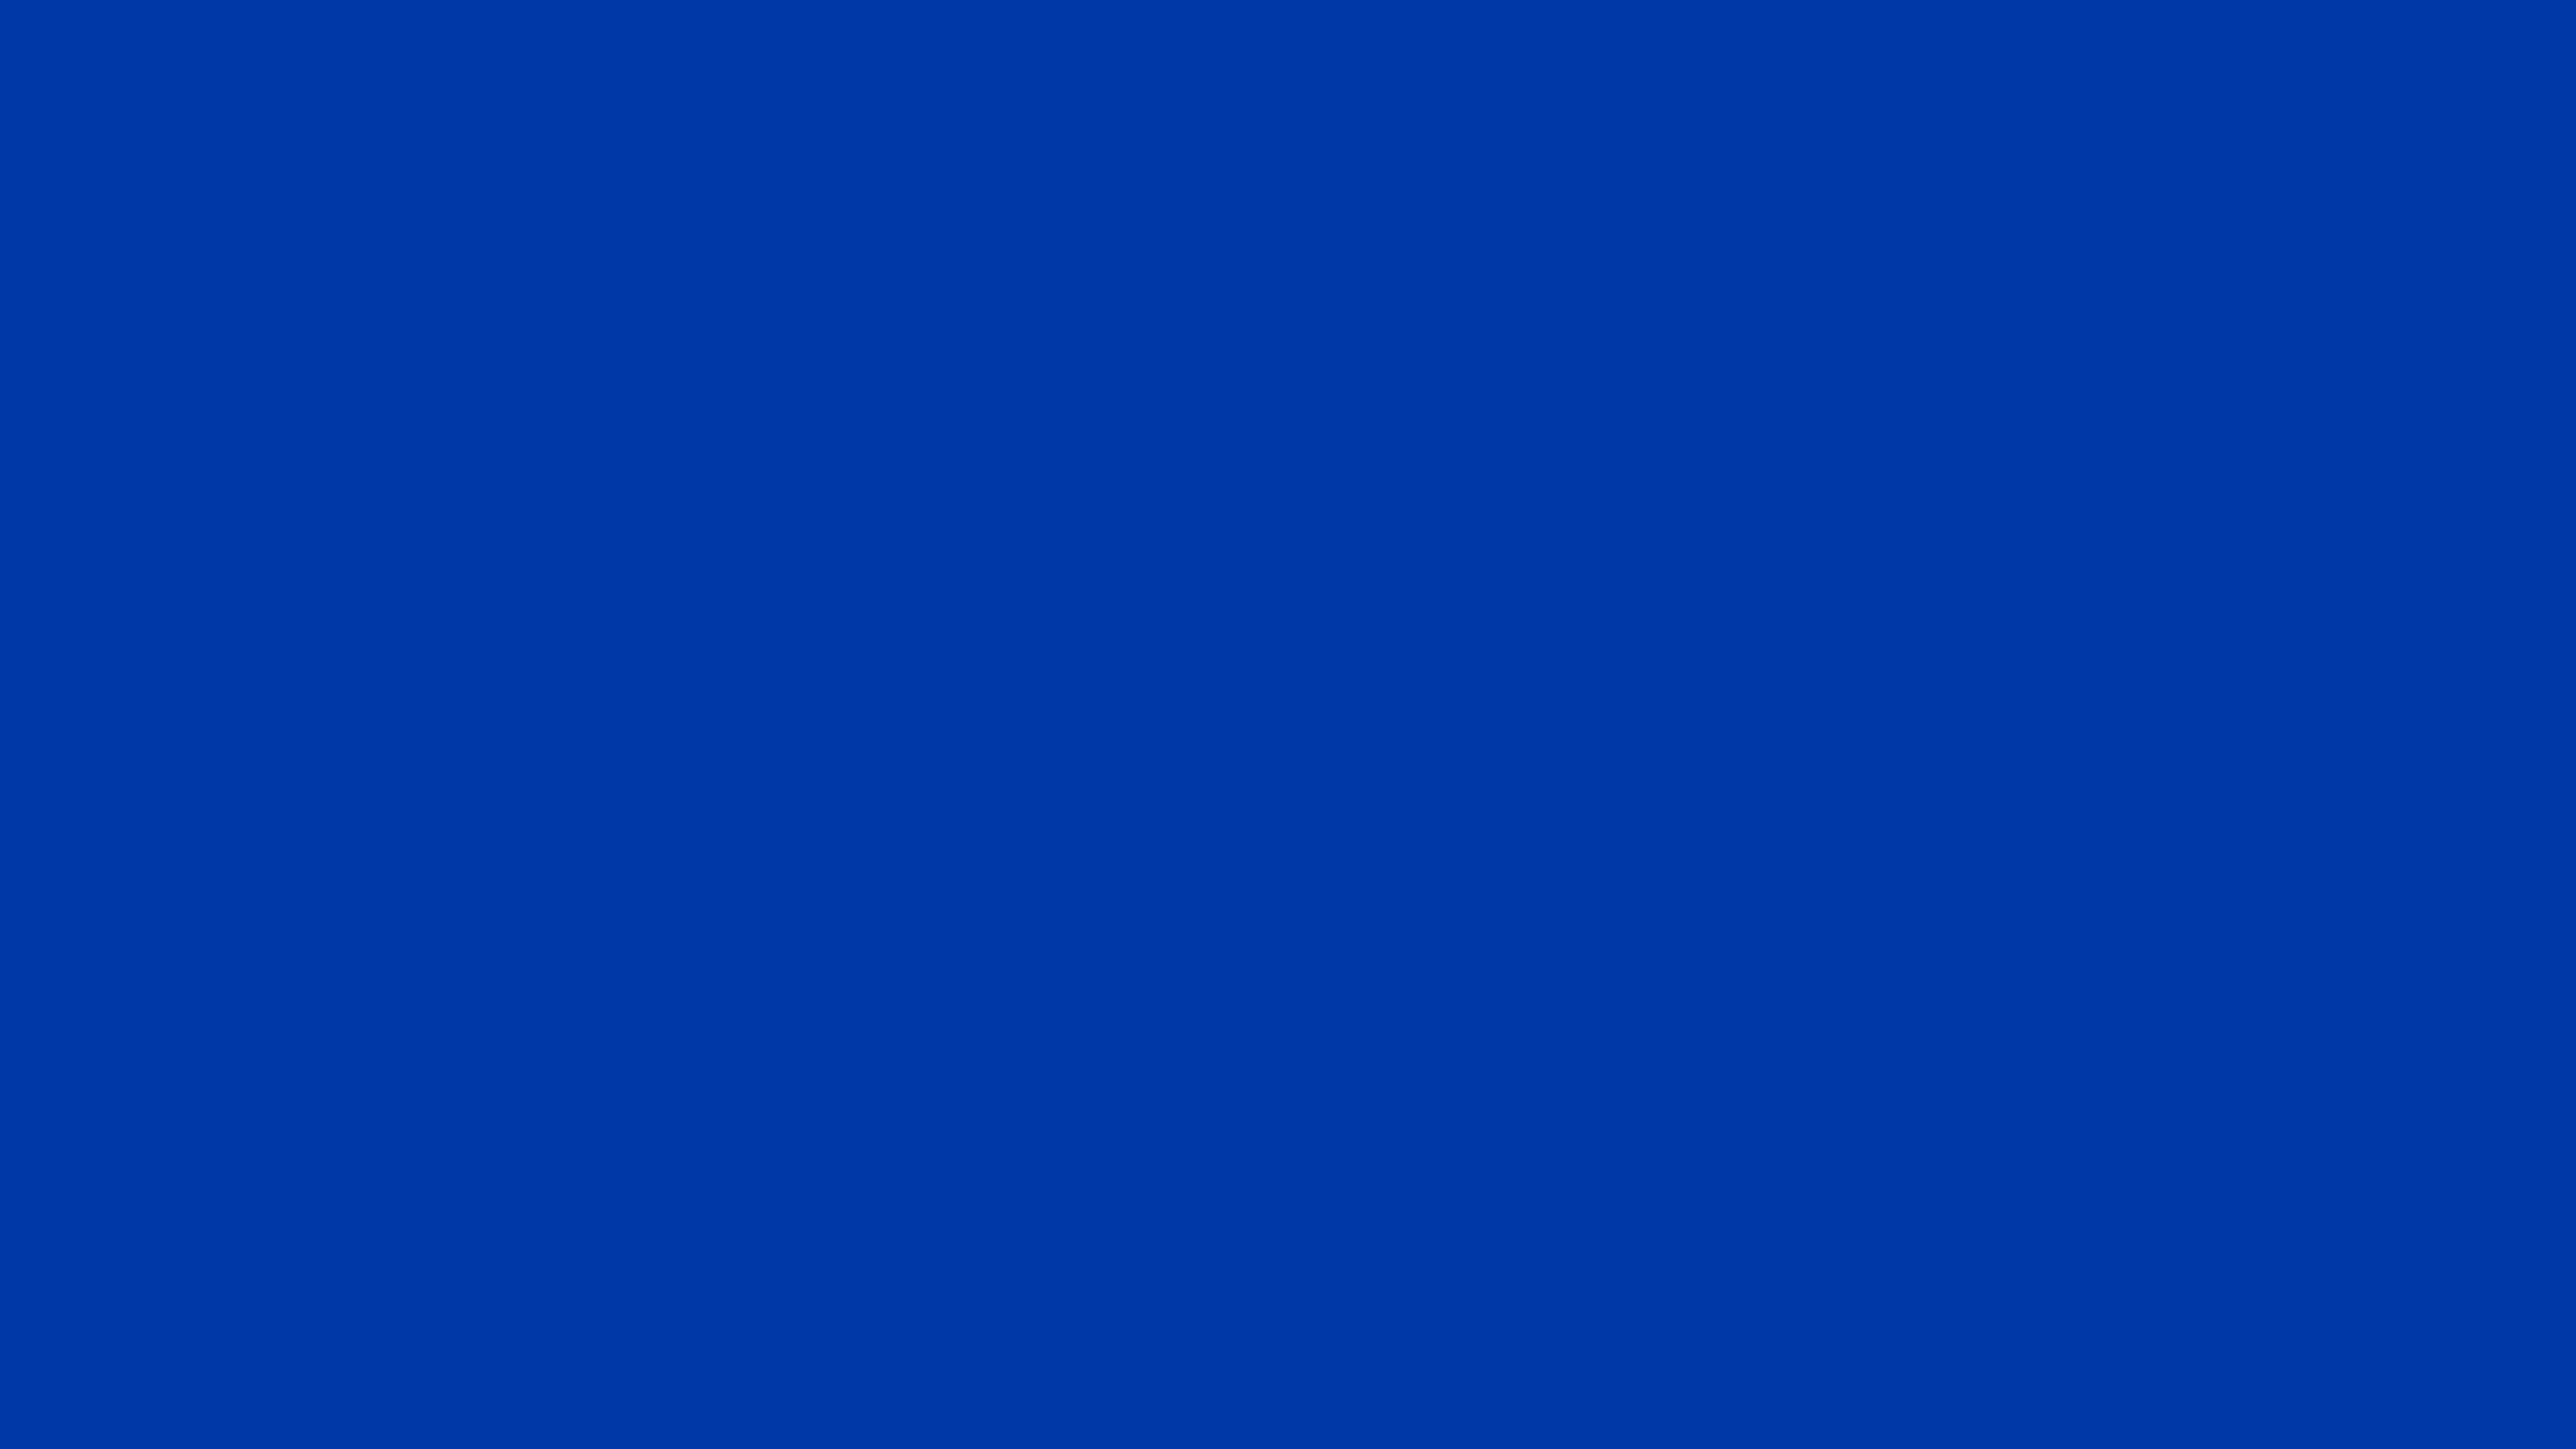 4096x2304 Royal Azure Solid Color Background